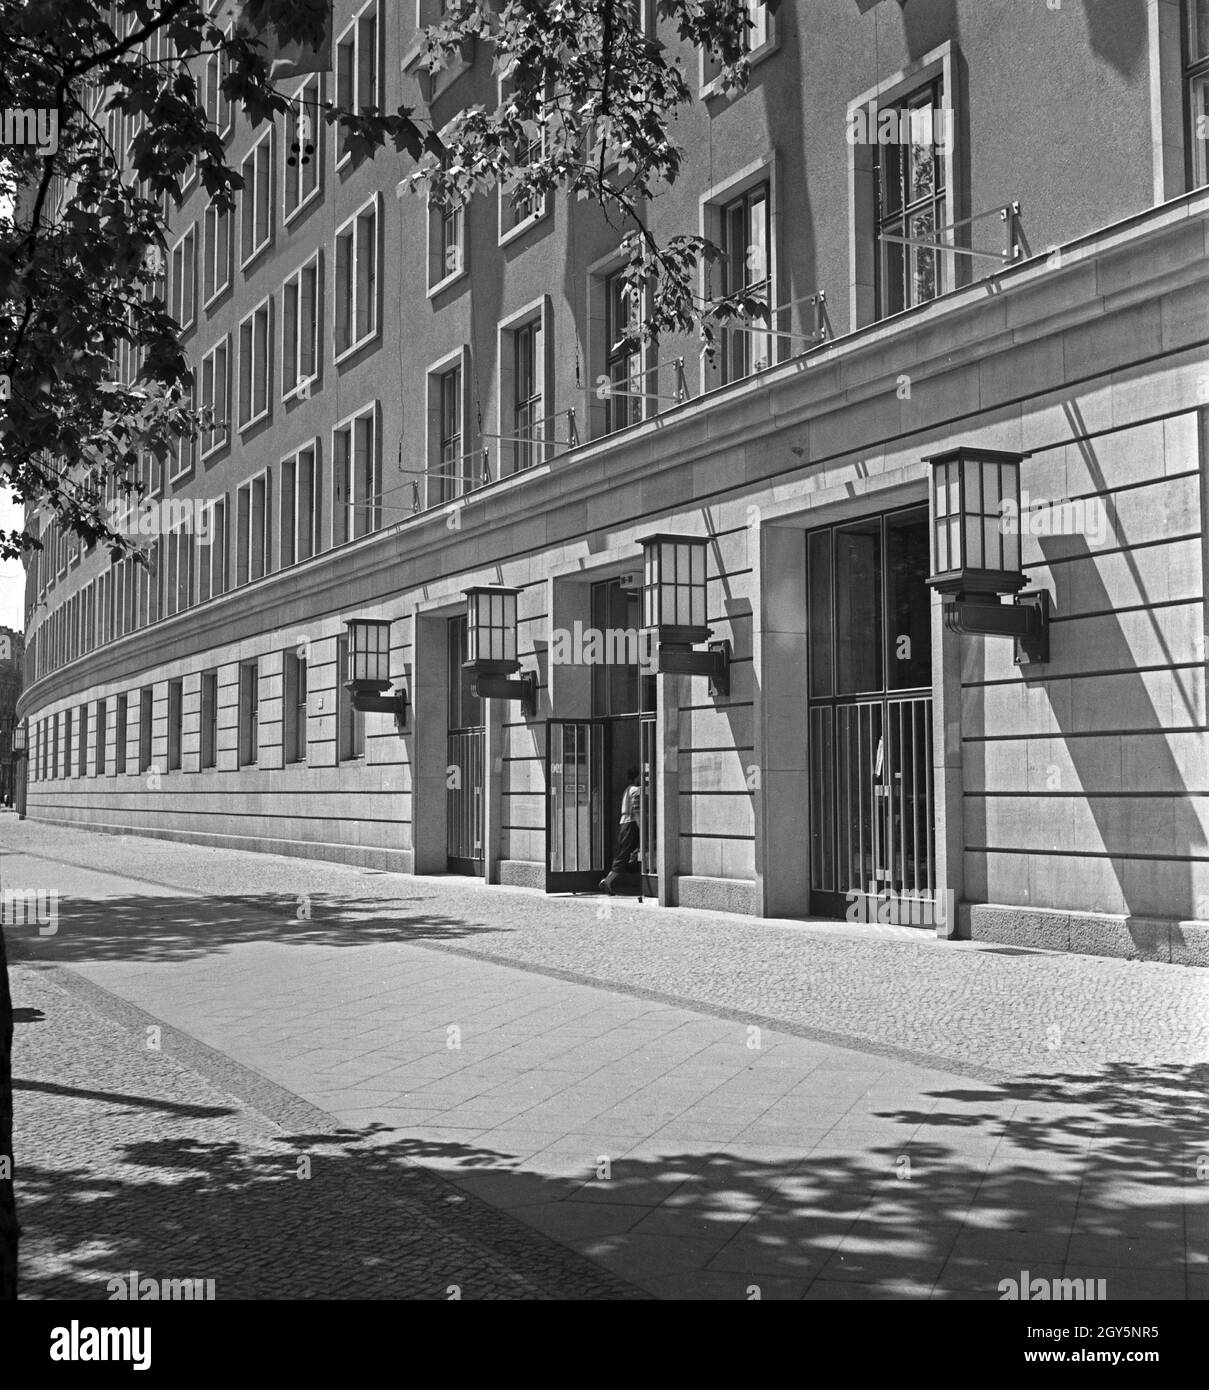 Spaziergang durch die Reichshauptstadt Berlin, 1940er Jahre. Facendo una passeggiata attraverso la capitale del III. Reich, Berlino, Germania 1940. Foto Stock